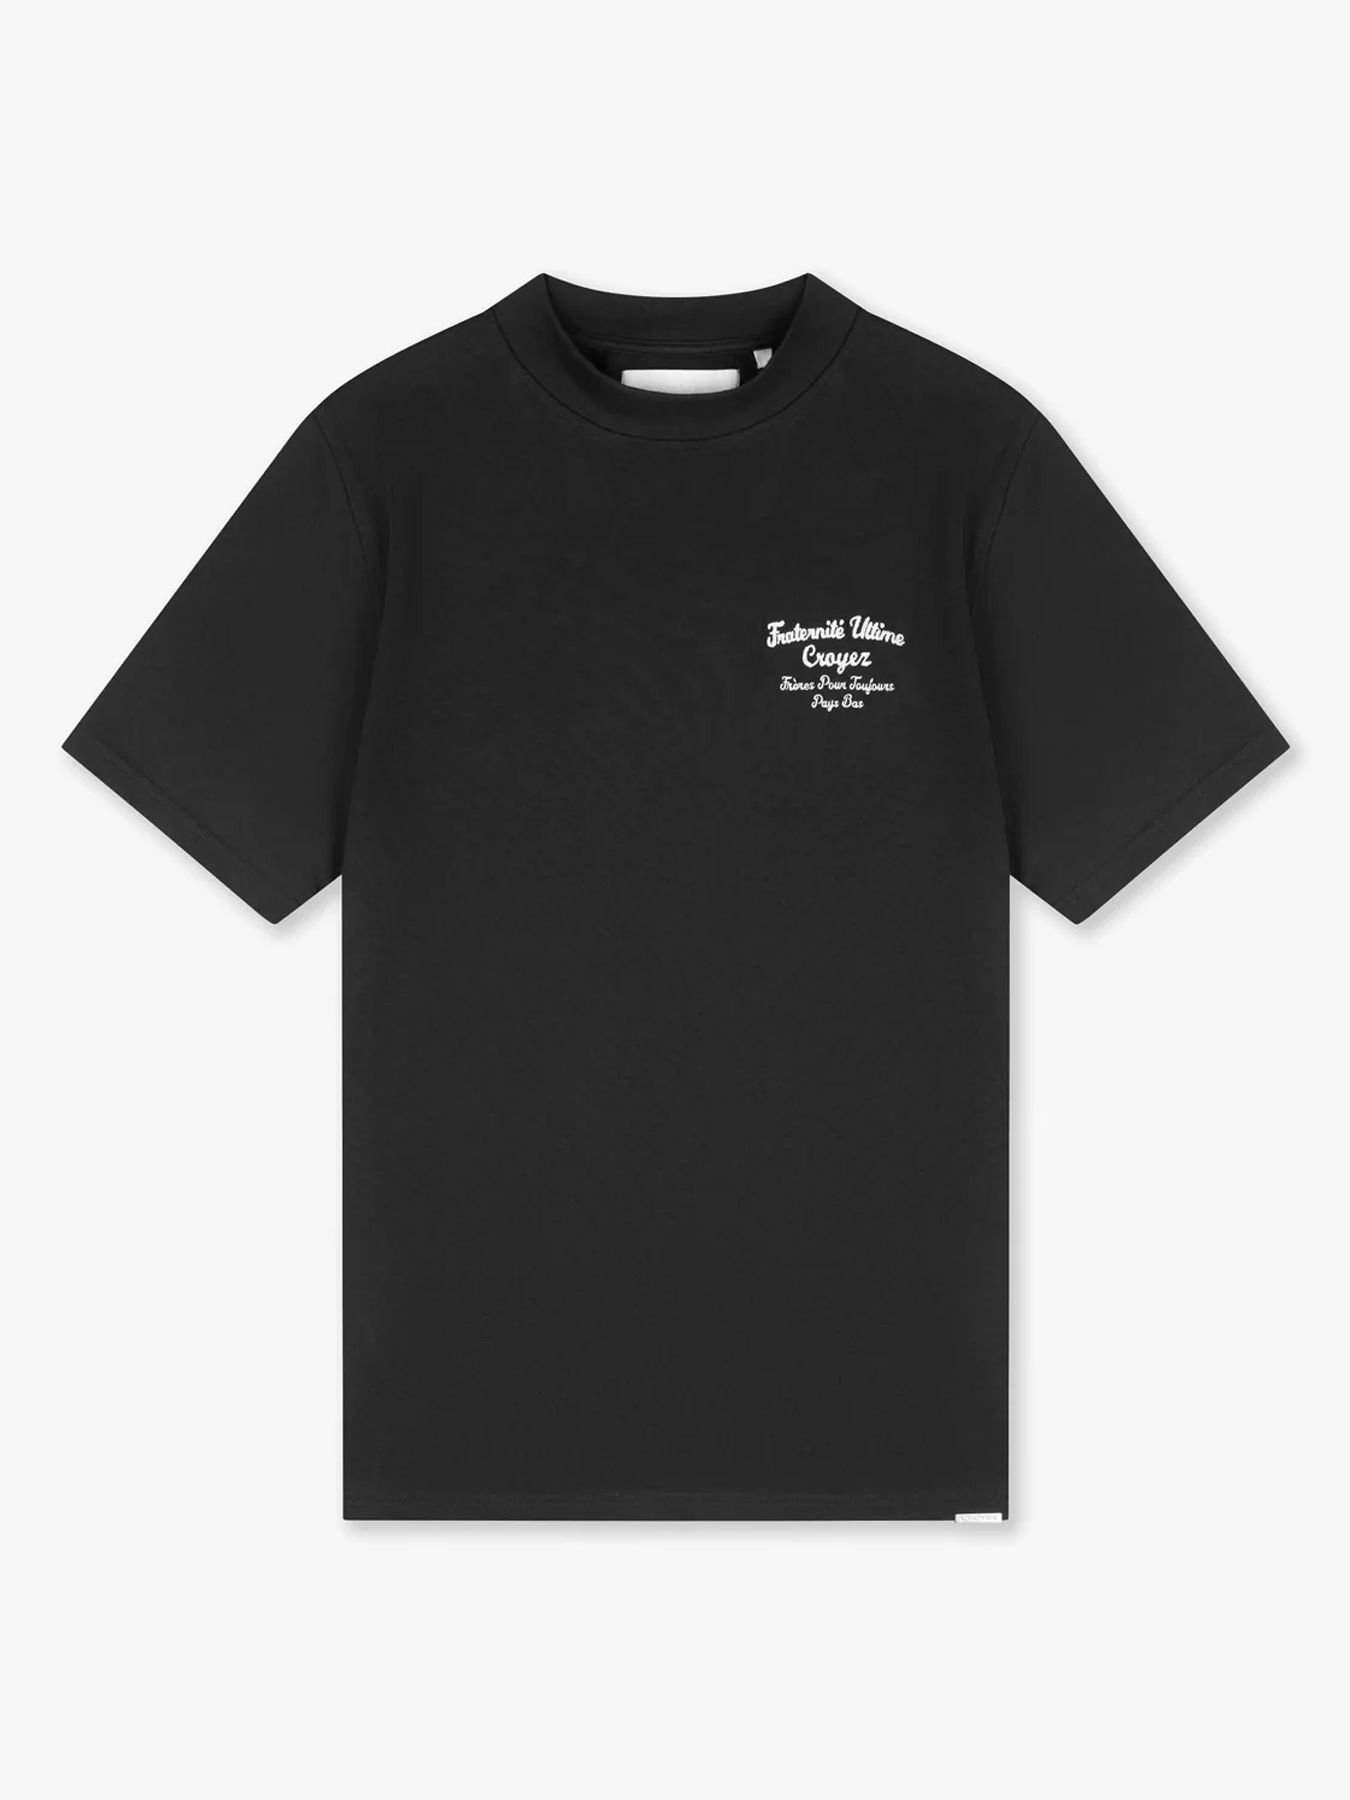 Croyez Cr1-aw23-05 t-shirt Black 00105276-999